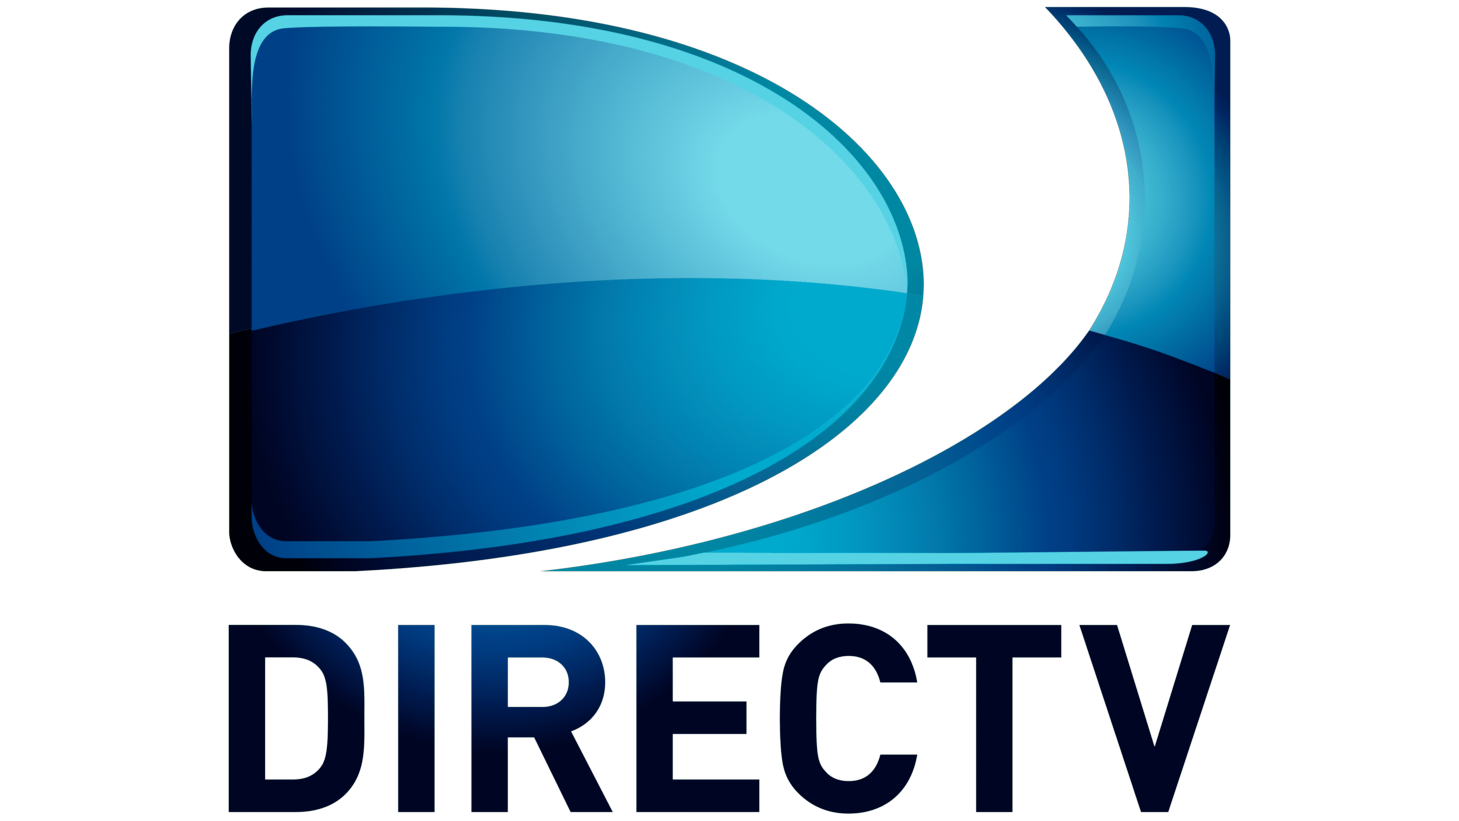 Directv sign 2011 2015